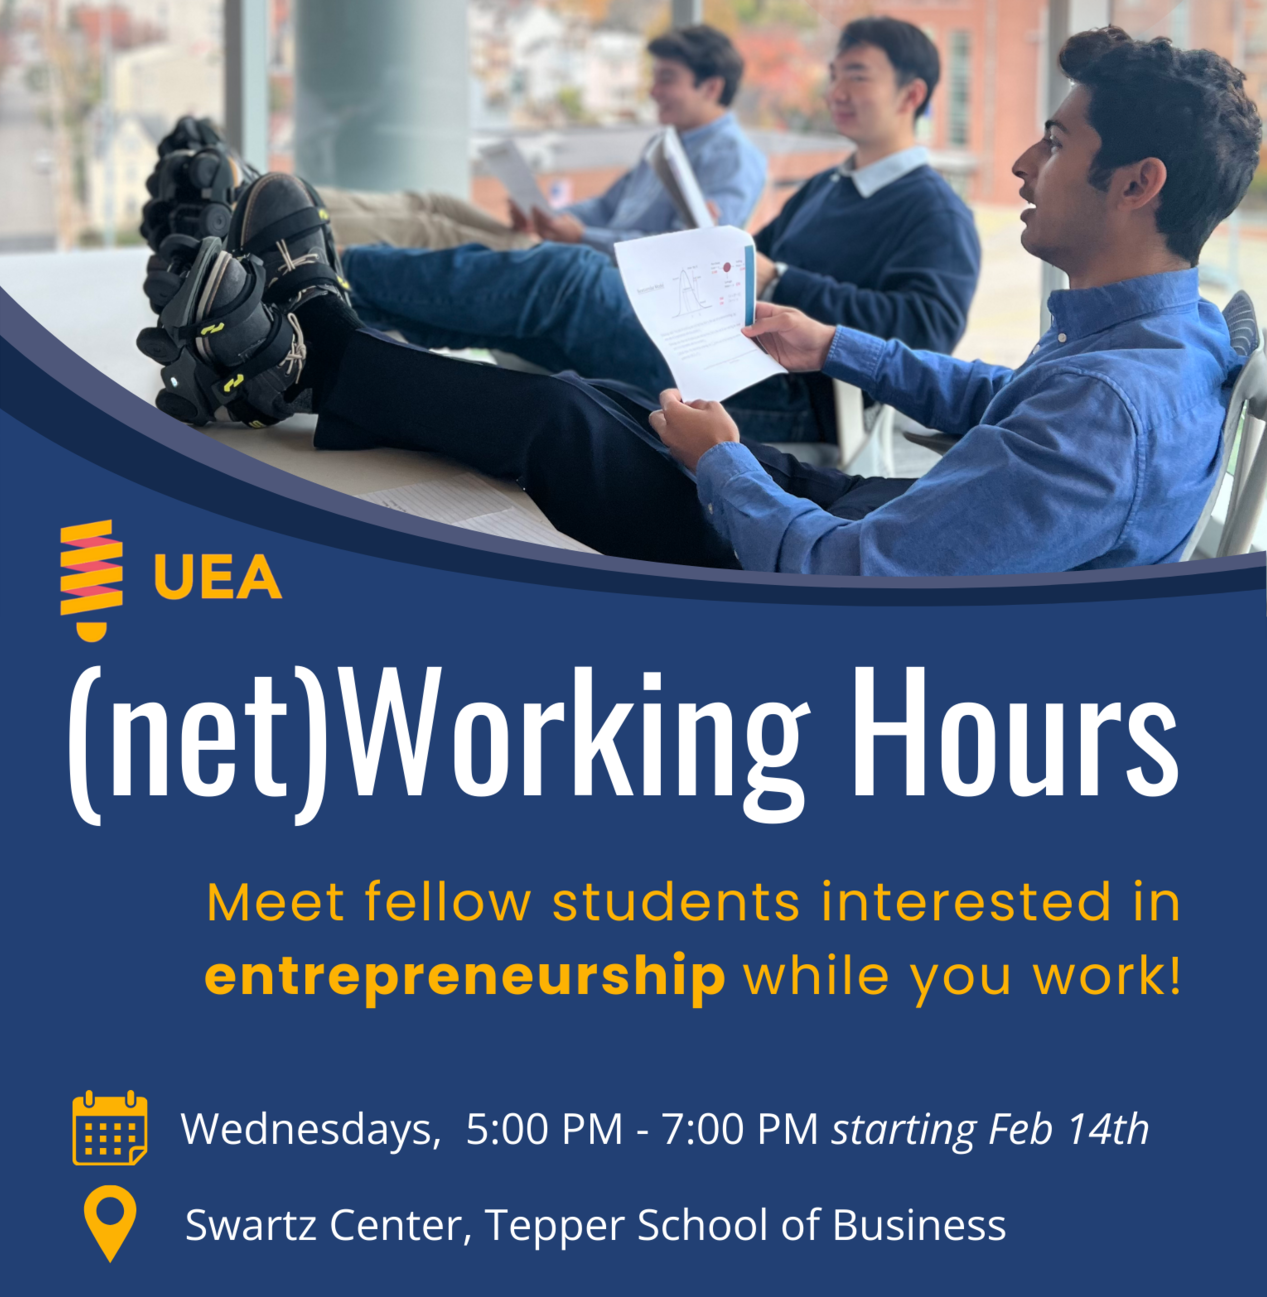 Undergraduate Entrepreneurship Association (UEA) and (net)Working Hours